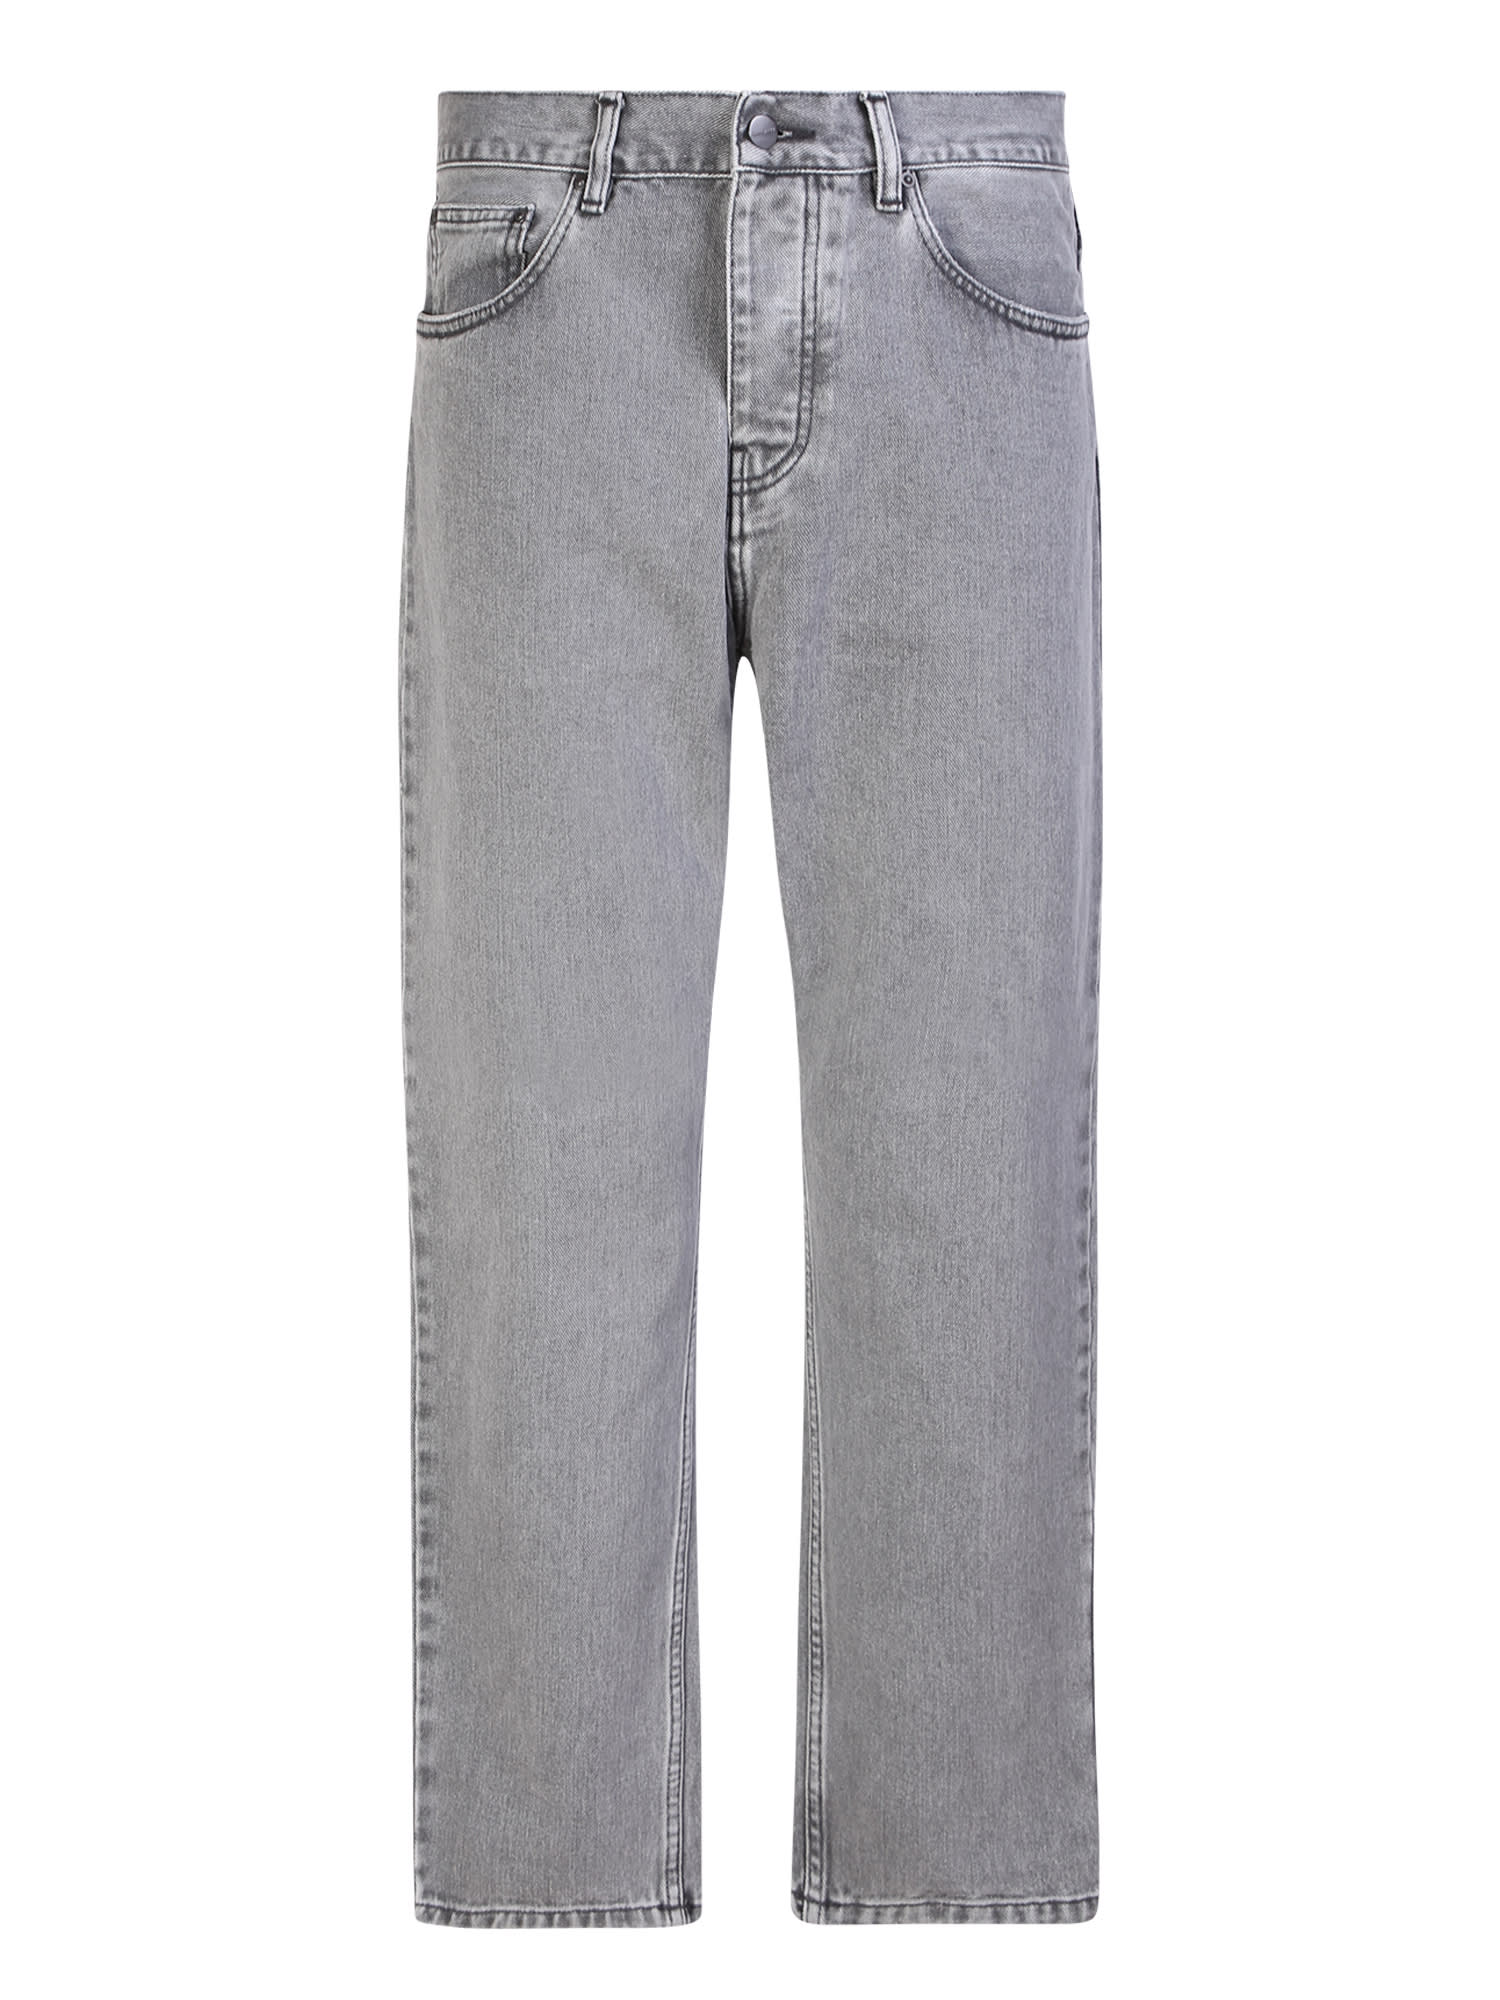 Carhartt Newel Gray Jeans